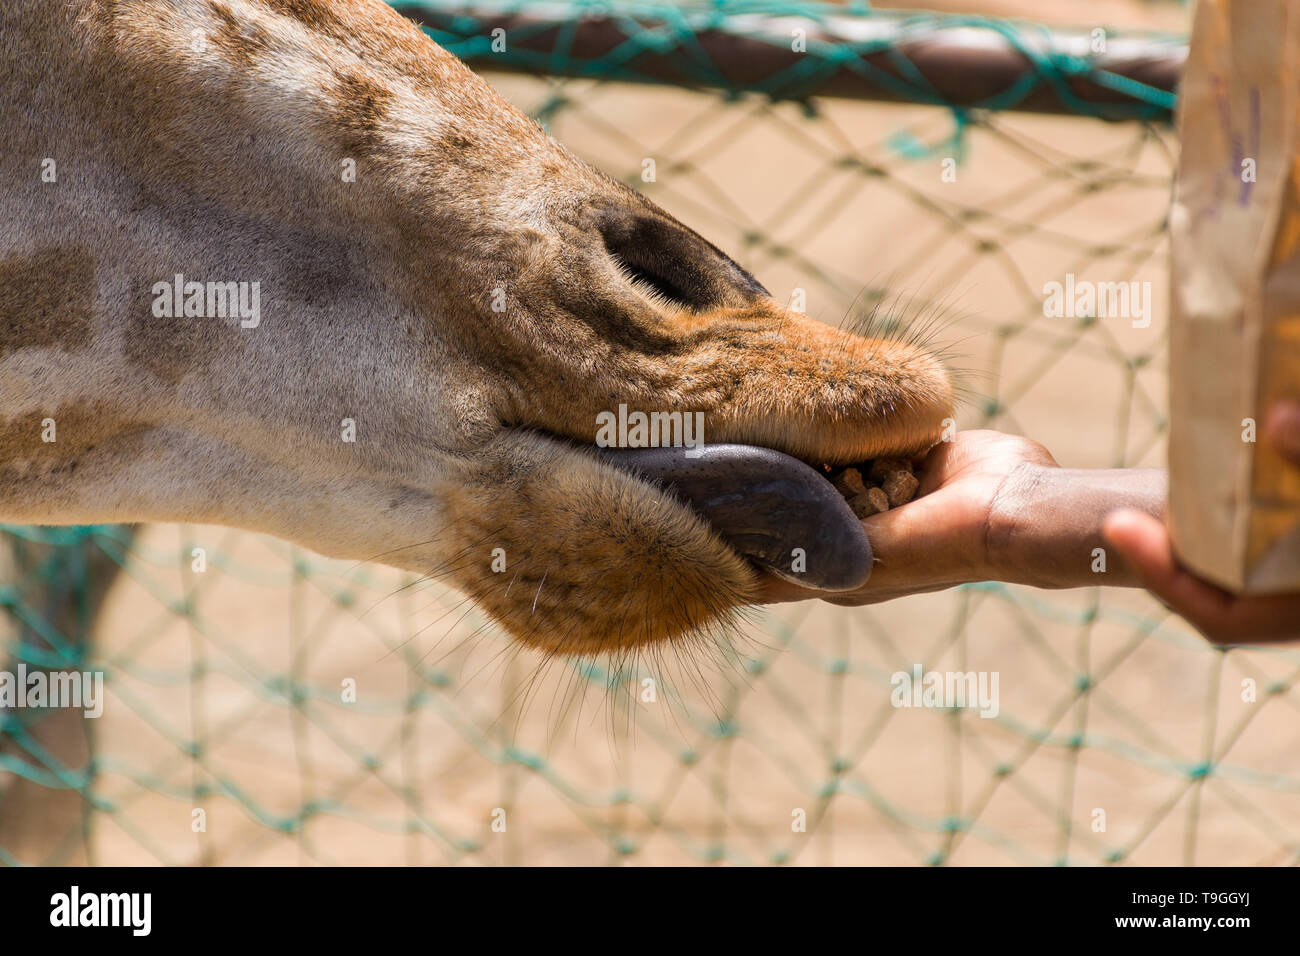 Rothschild's giraffe (Giraffa camelopardalis rothschildi) being hand fed food pellets Stock Photo